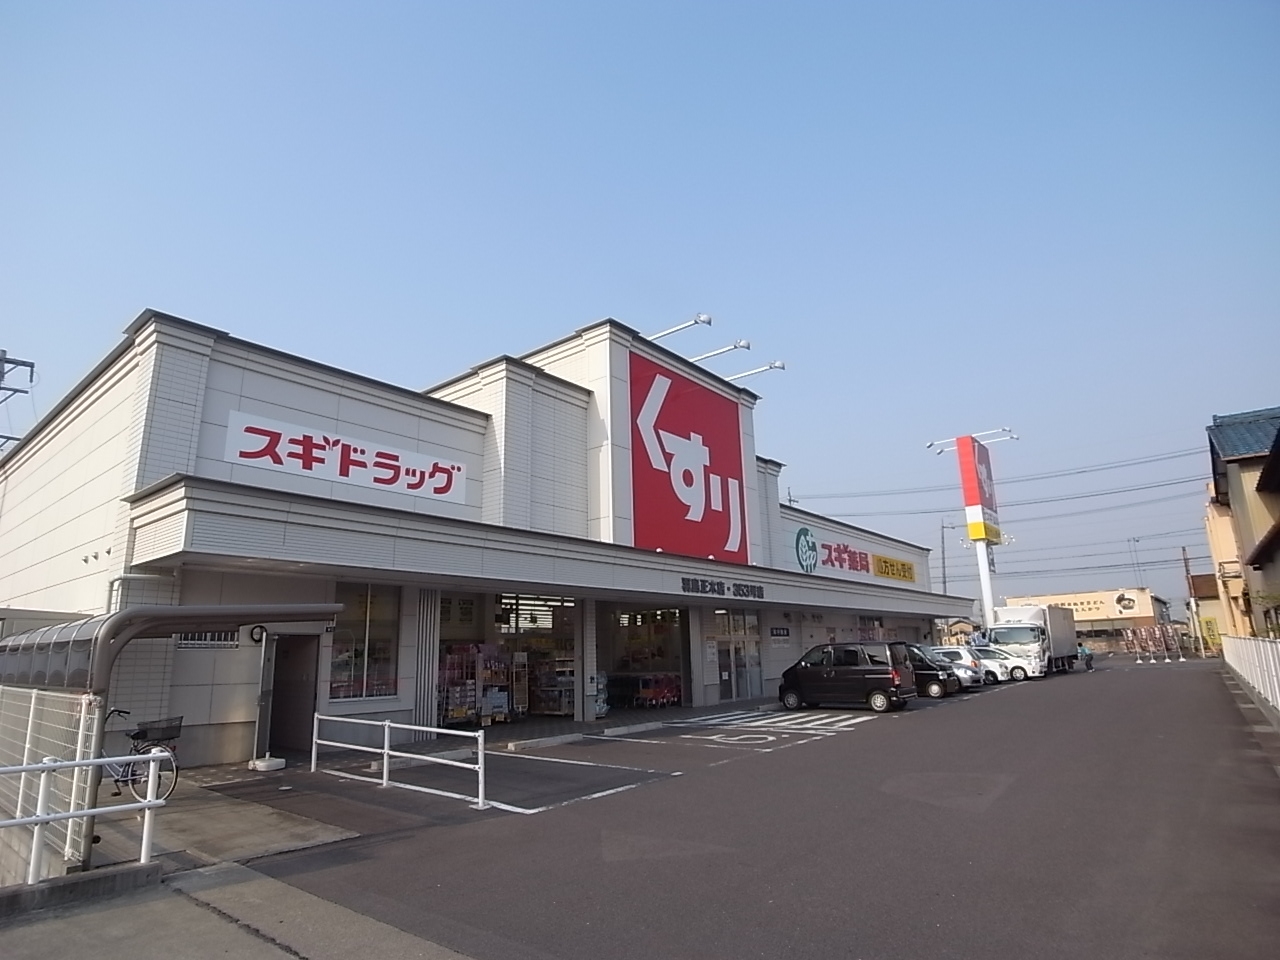 Dorakkusutoa. Cedar pharmacy Hashima Masaki shop 808m until (drugstore)